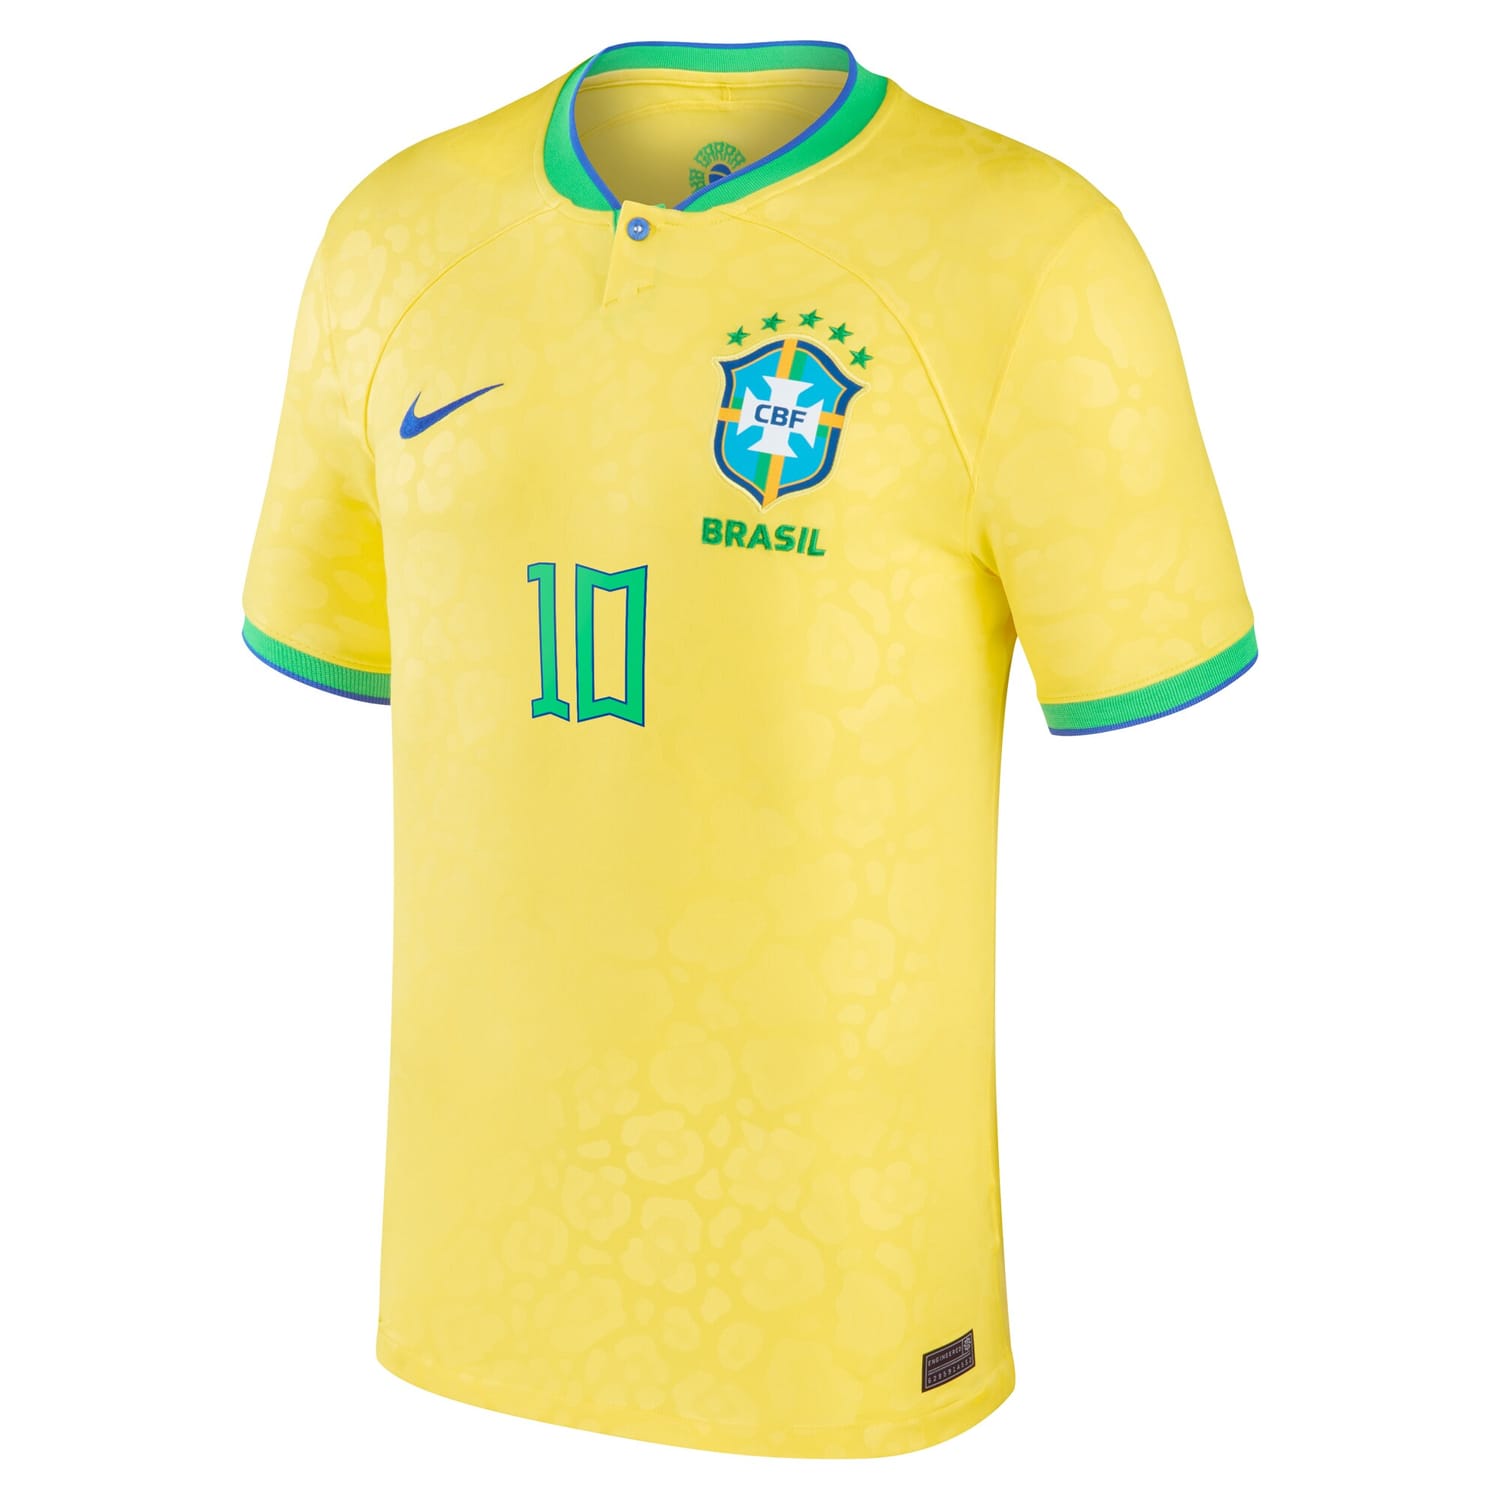 Brazil National Team Home Jersey Shirt Yellow 2022-23 player Neymar Jr. printing for Men